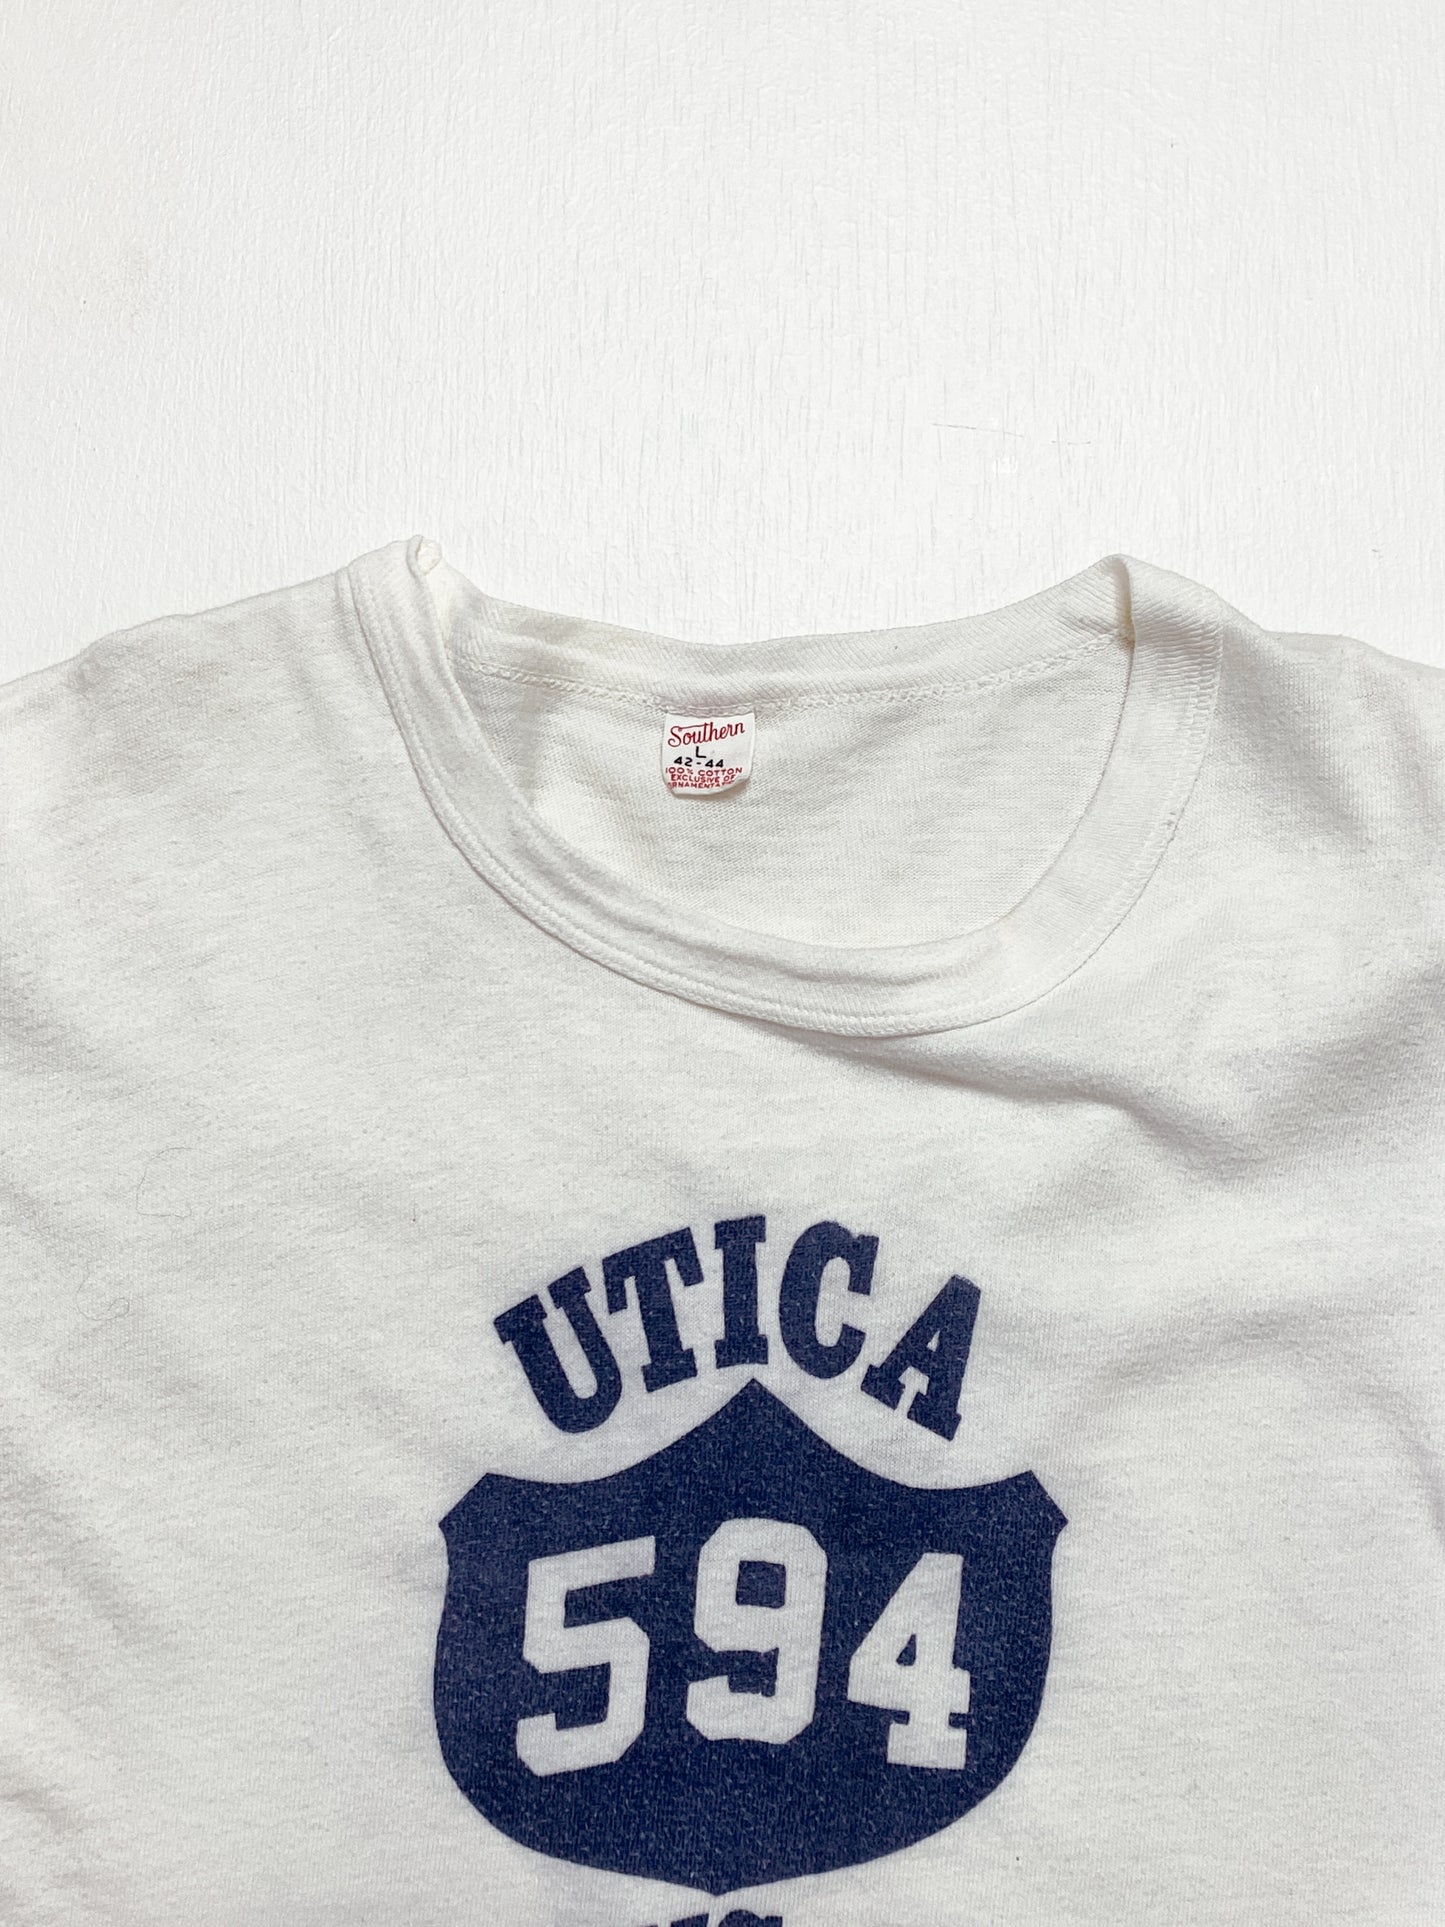 1950’s Utica Physical Education Tee